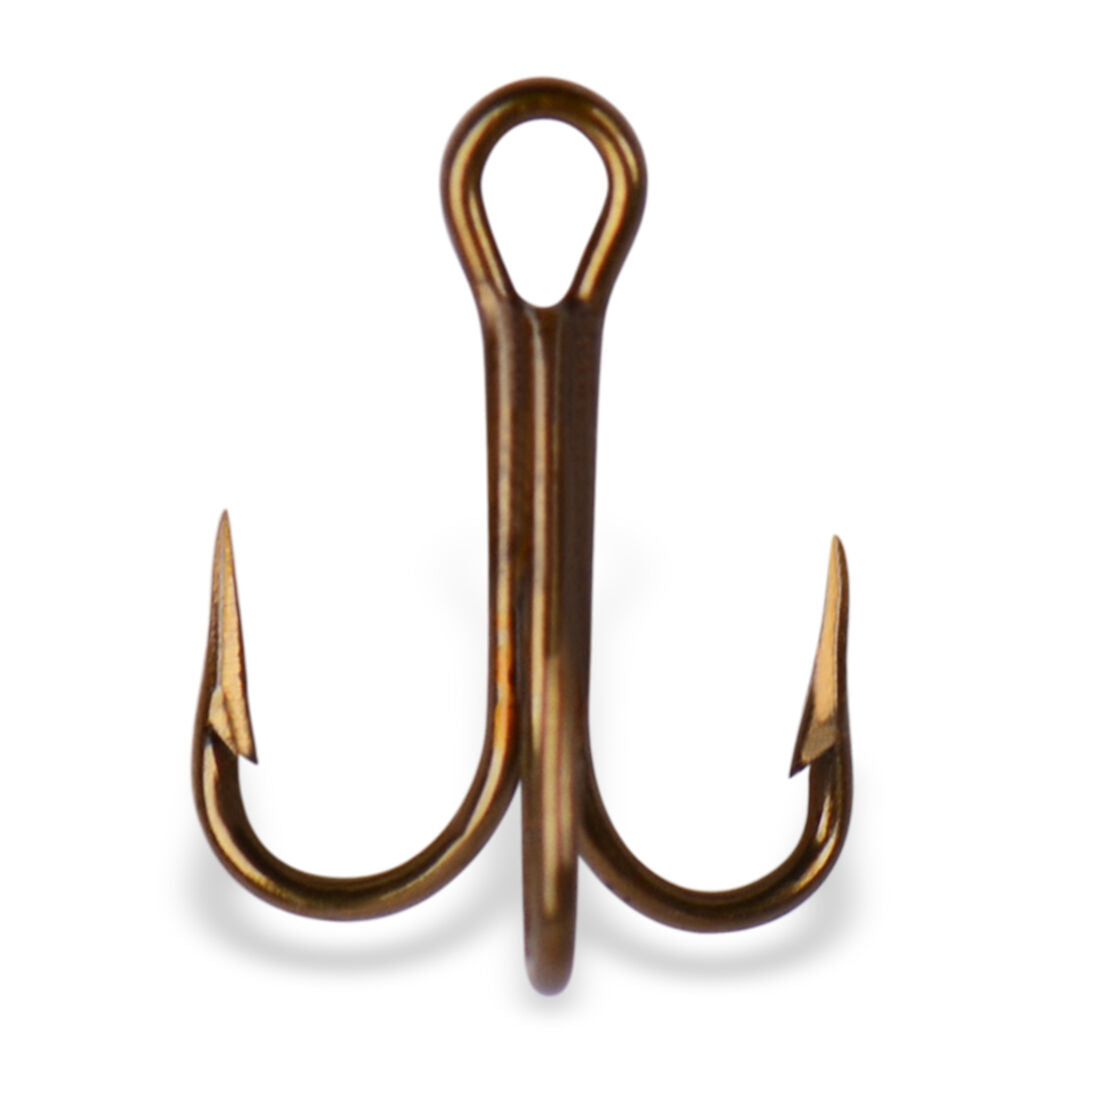 Mustad 3551-BR Classic Bronze Treble Hooks | Musky hooks 9/0 / 25